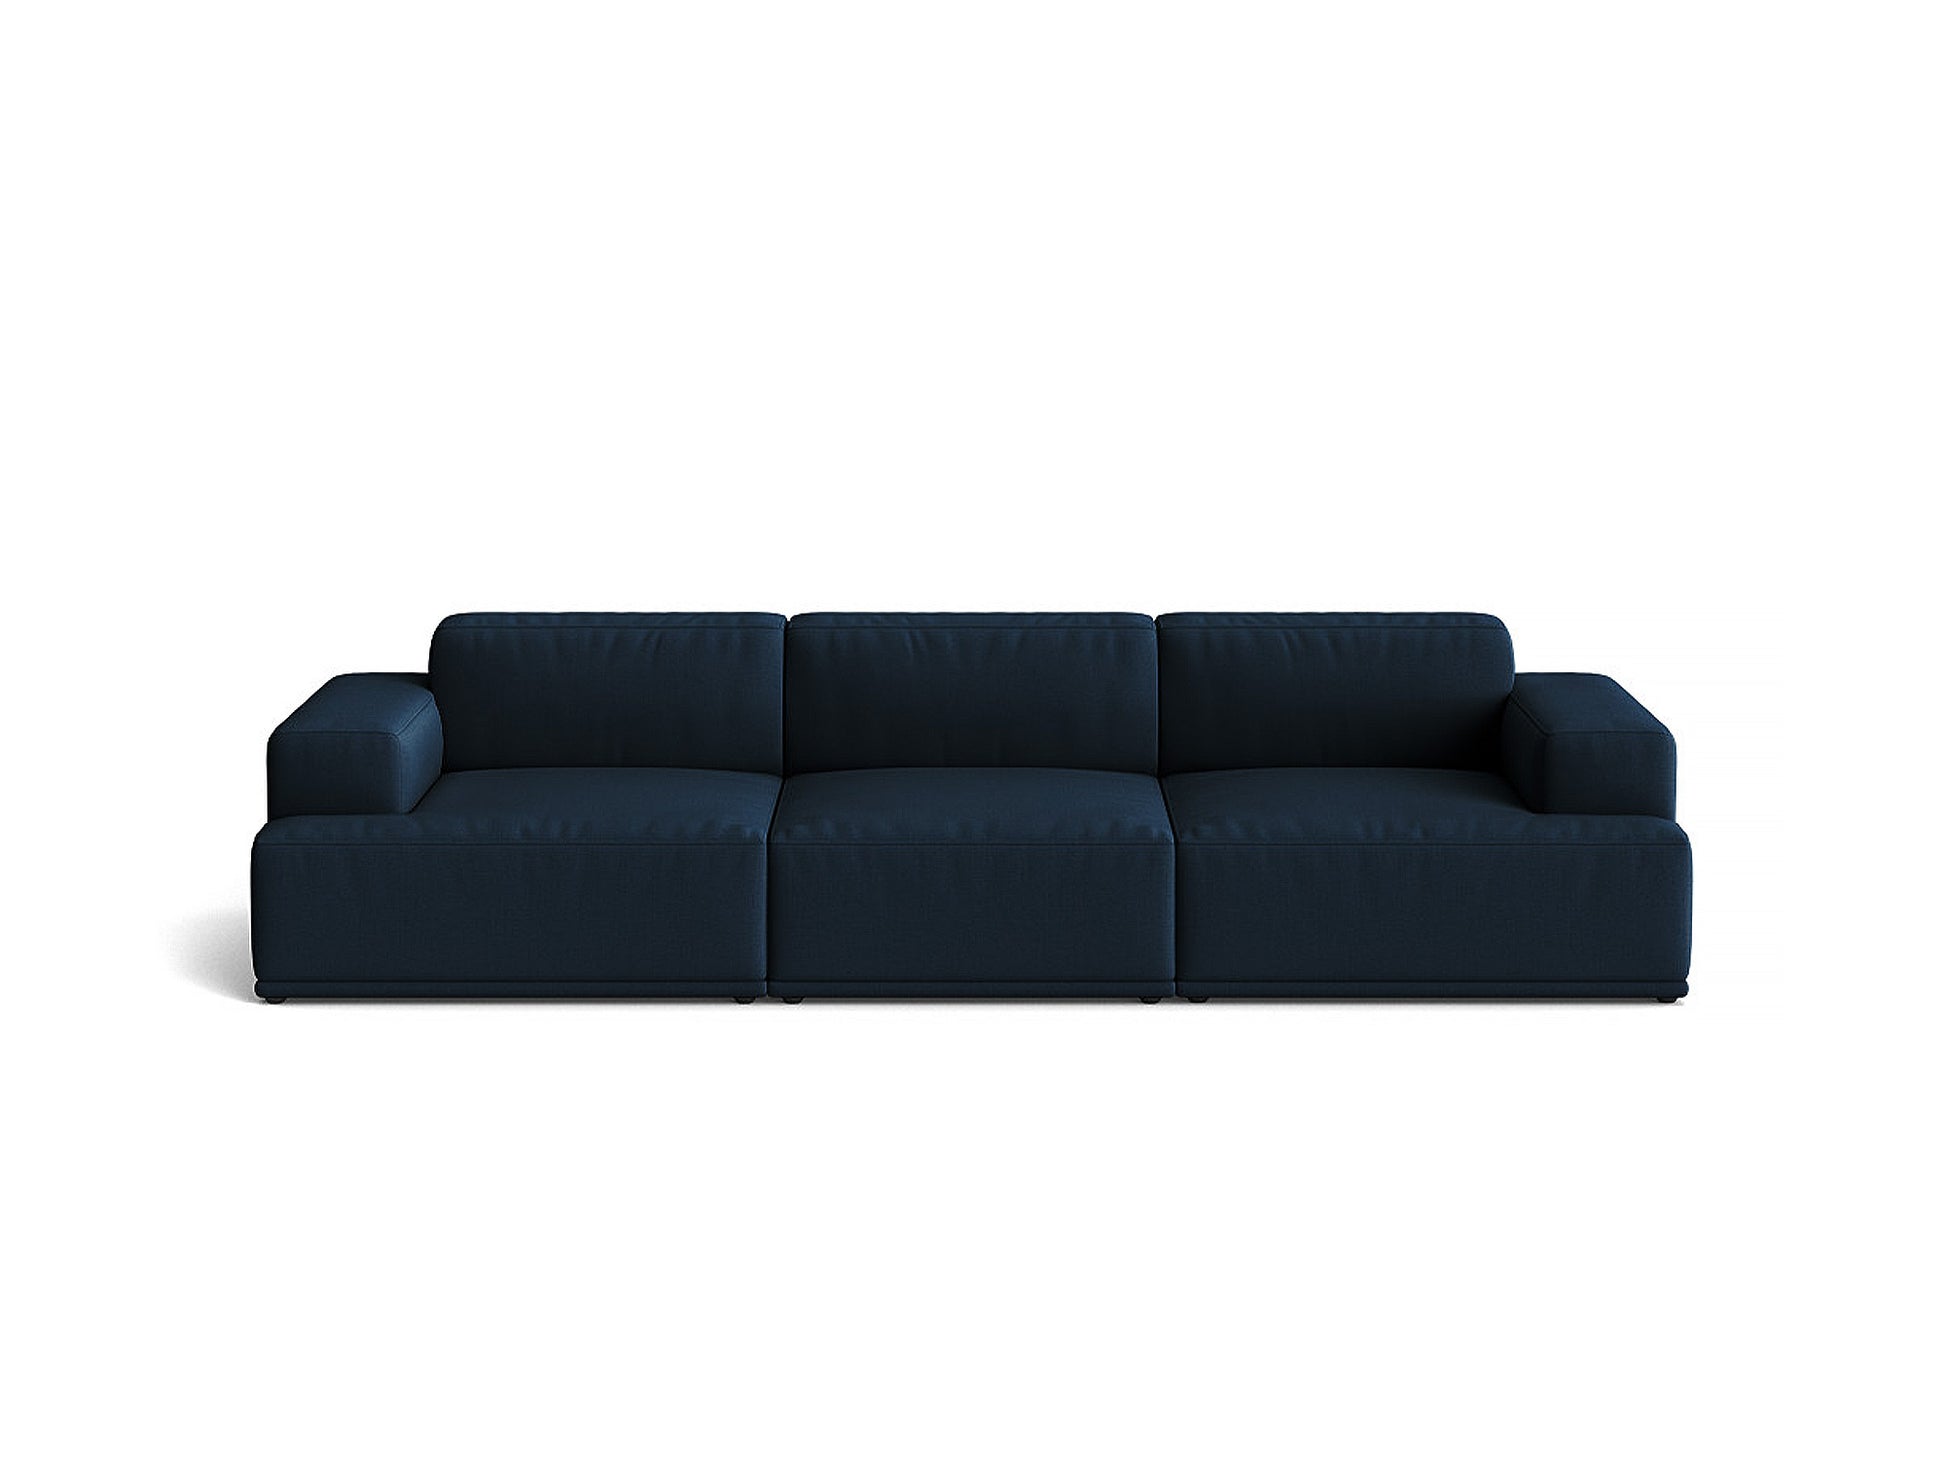 Connect Soft 3-Seater Modular Sofa by Muuto - Configuration 1 / Steelcut Trio 796